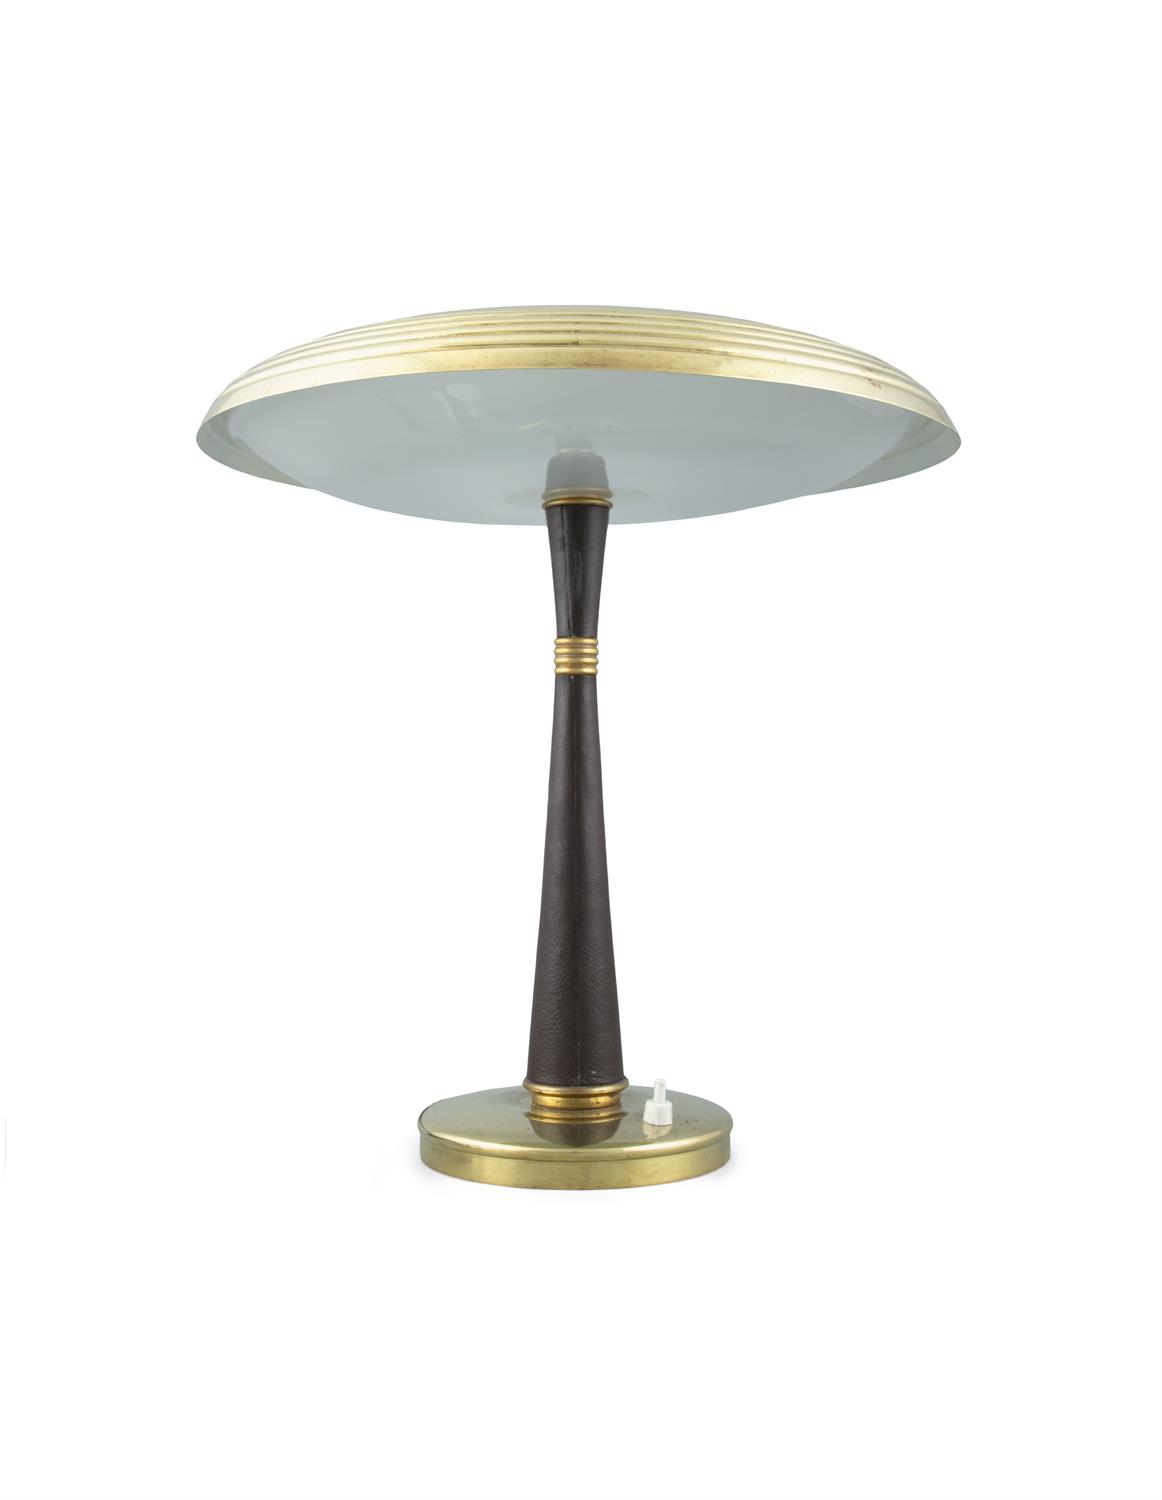 OSCAR TORLASCO (B. 1934) A brass 'Model 338' table lamp by Oscar Torlasco, for Lumi, c.1950. - Image 3 of 3